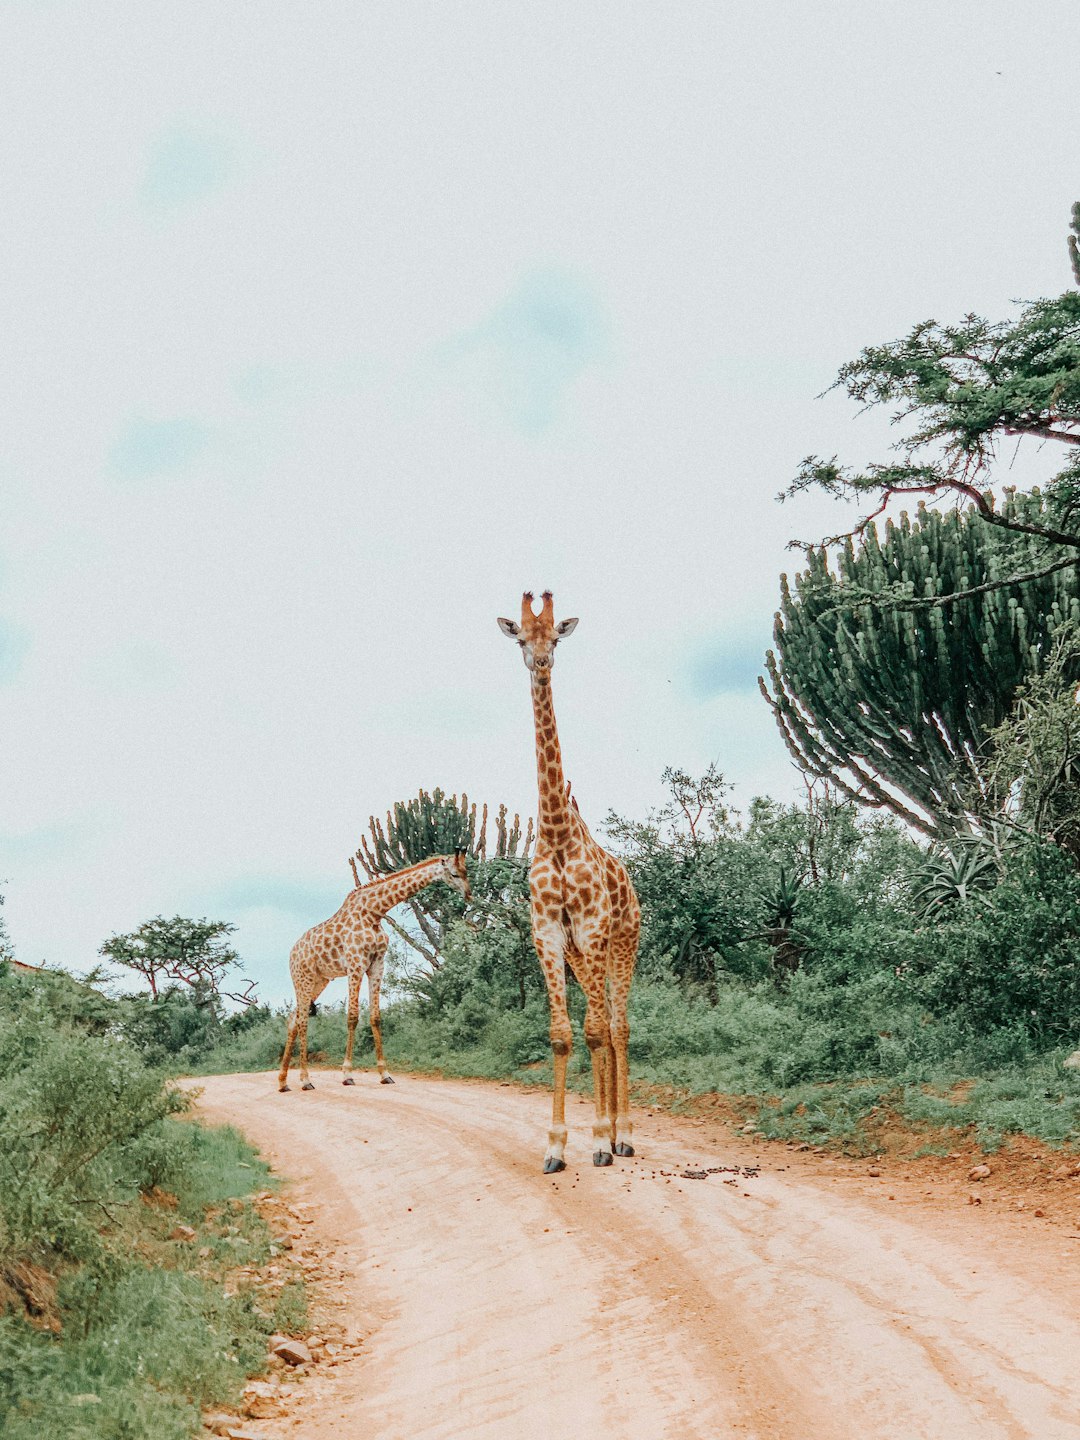  giraffe standing on brown dirt road during daytime giraffe